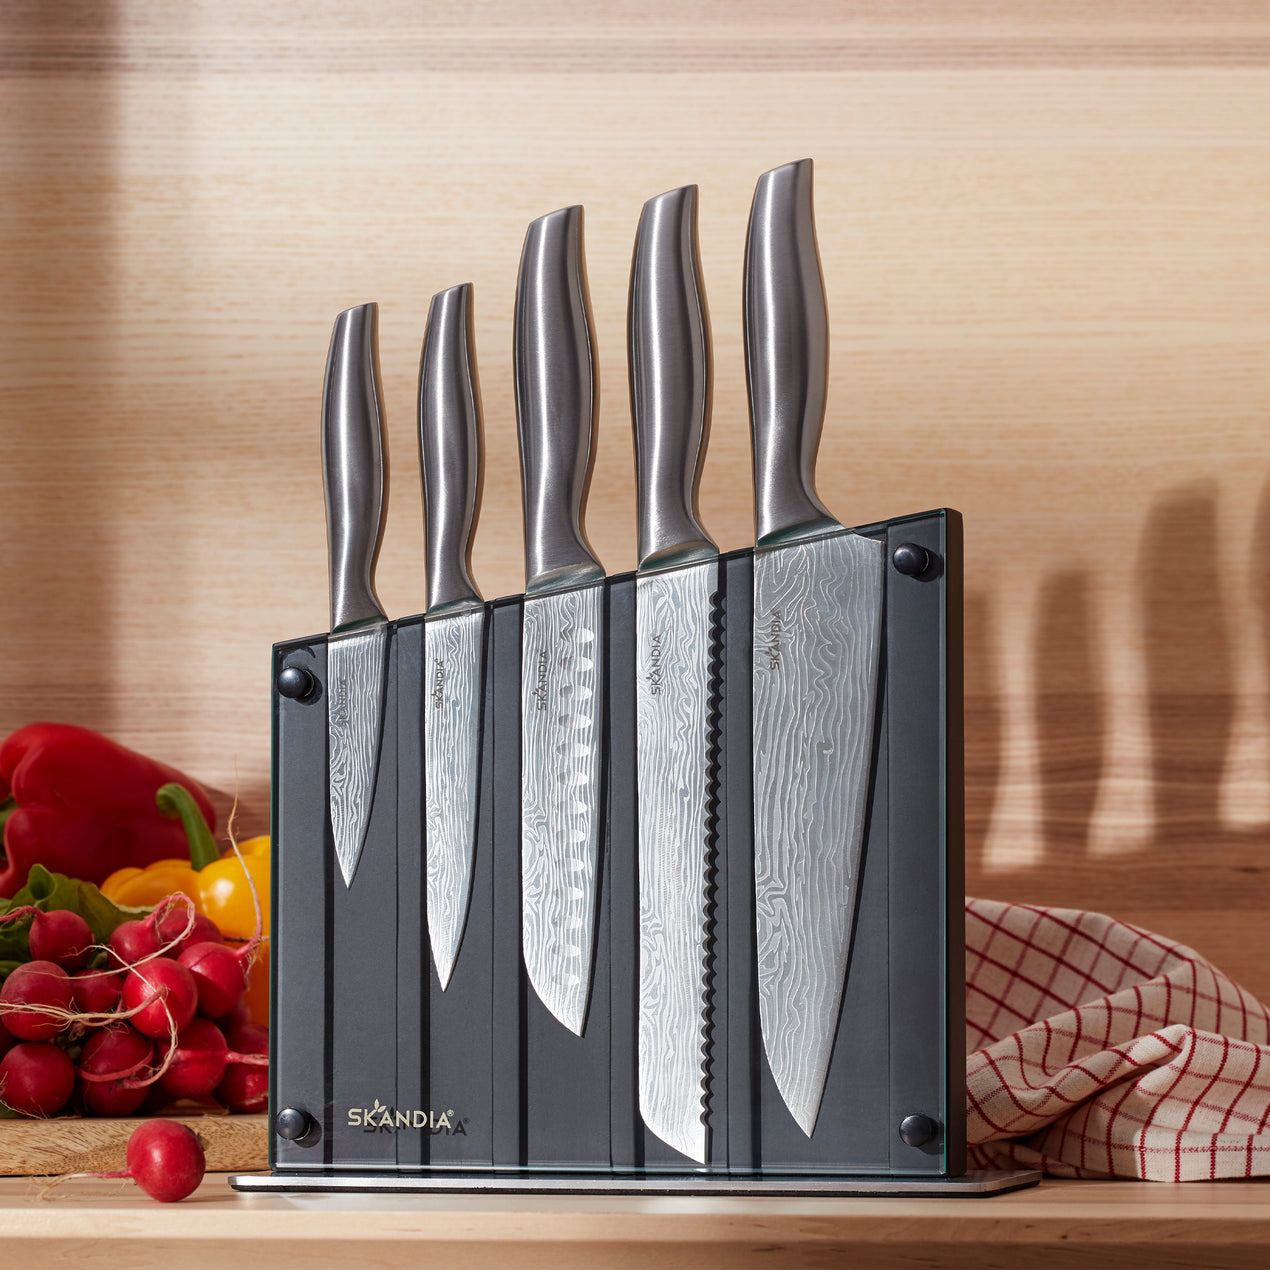 Oneida Stainless Steel Kitchen Knife Sets